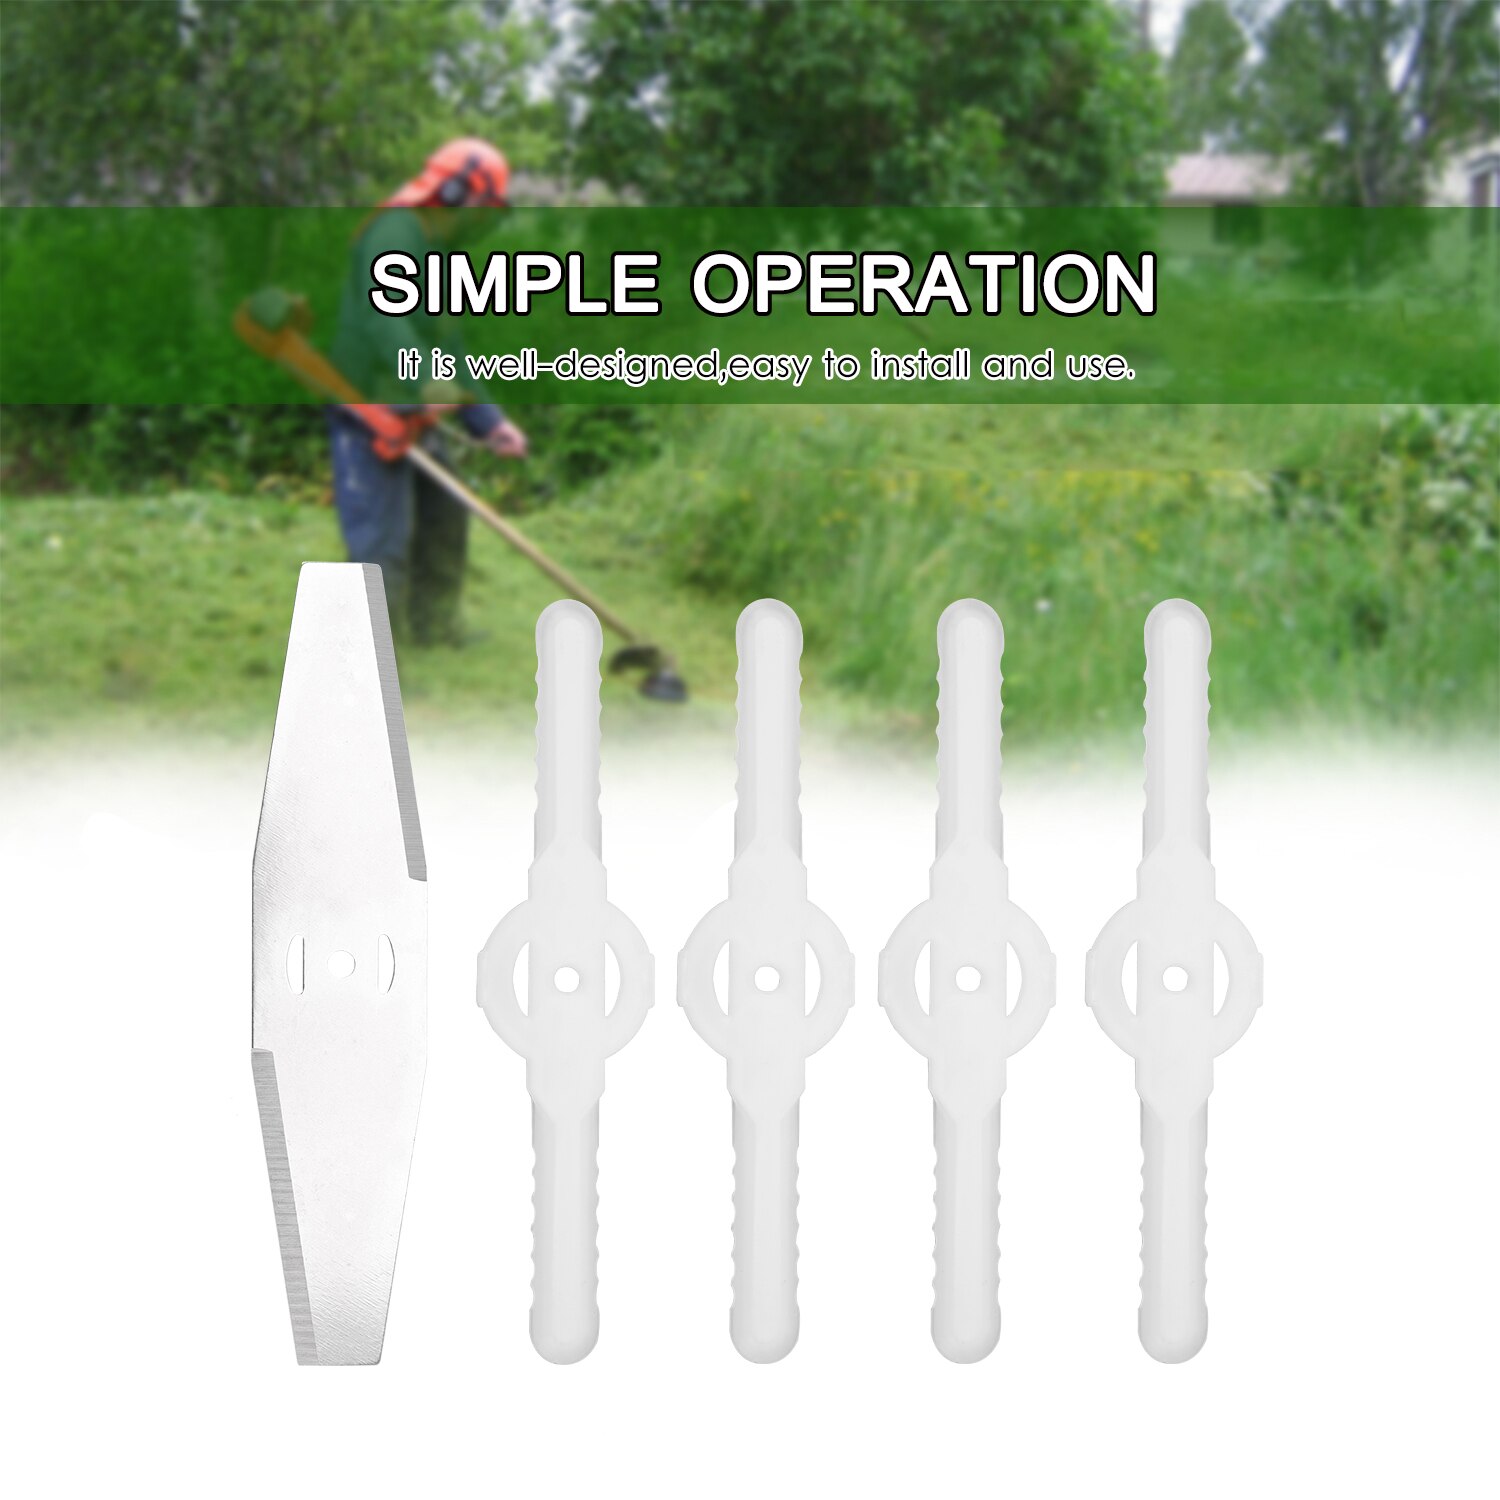 KKMOON 5 PCS Lawn Mower Blade Set Grass Trimmer Weeder Blades Kit Mower Accessory for Garden Agriculture